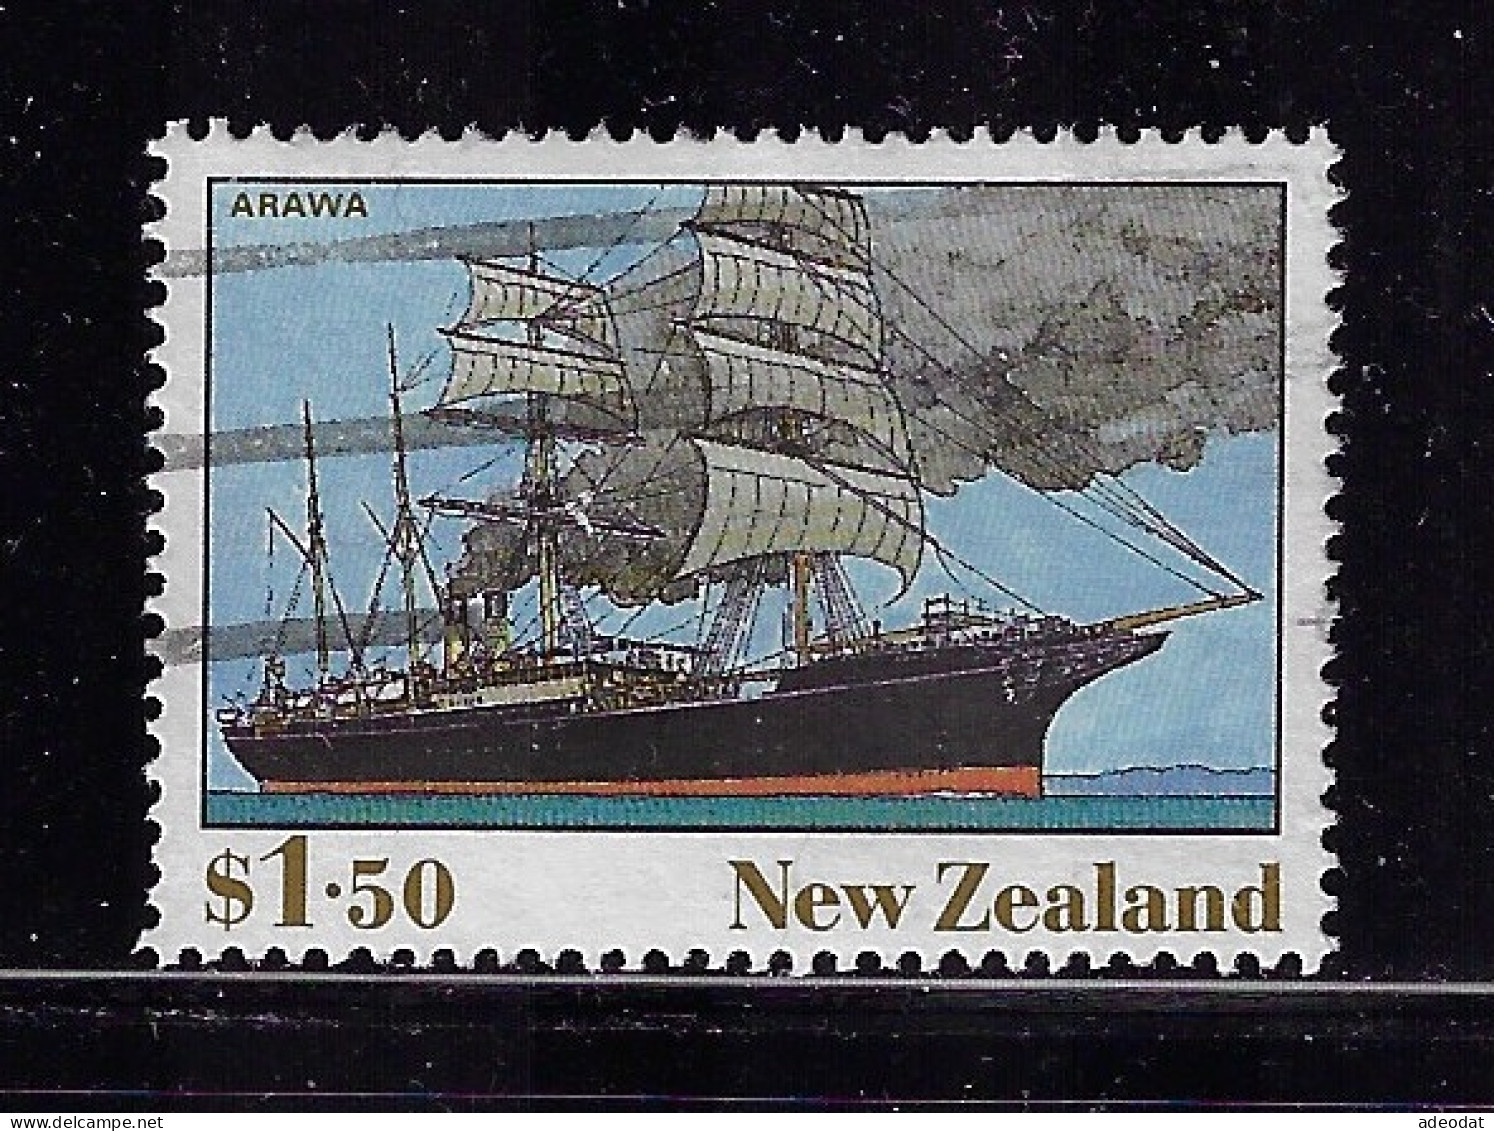 NEW ZEALAND 1990  SCOTT #985  USED - Usati